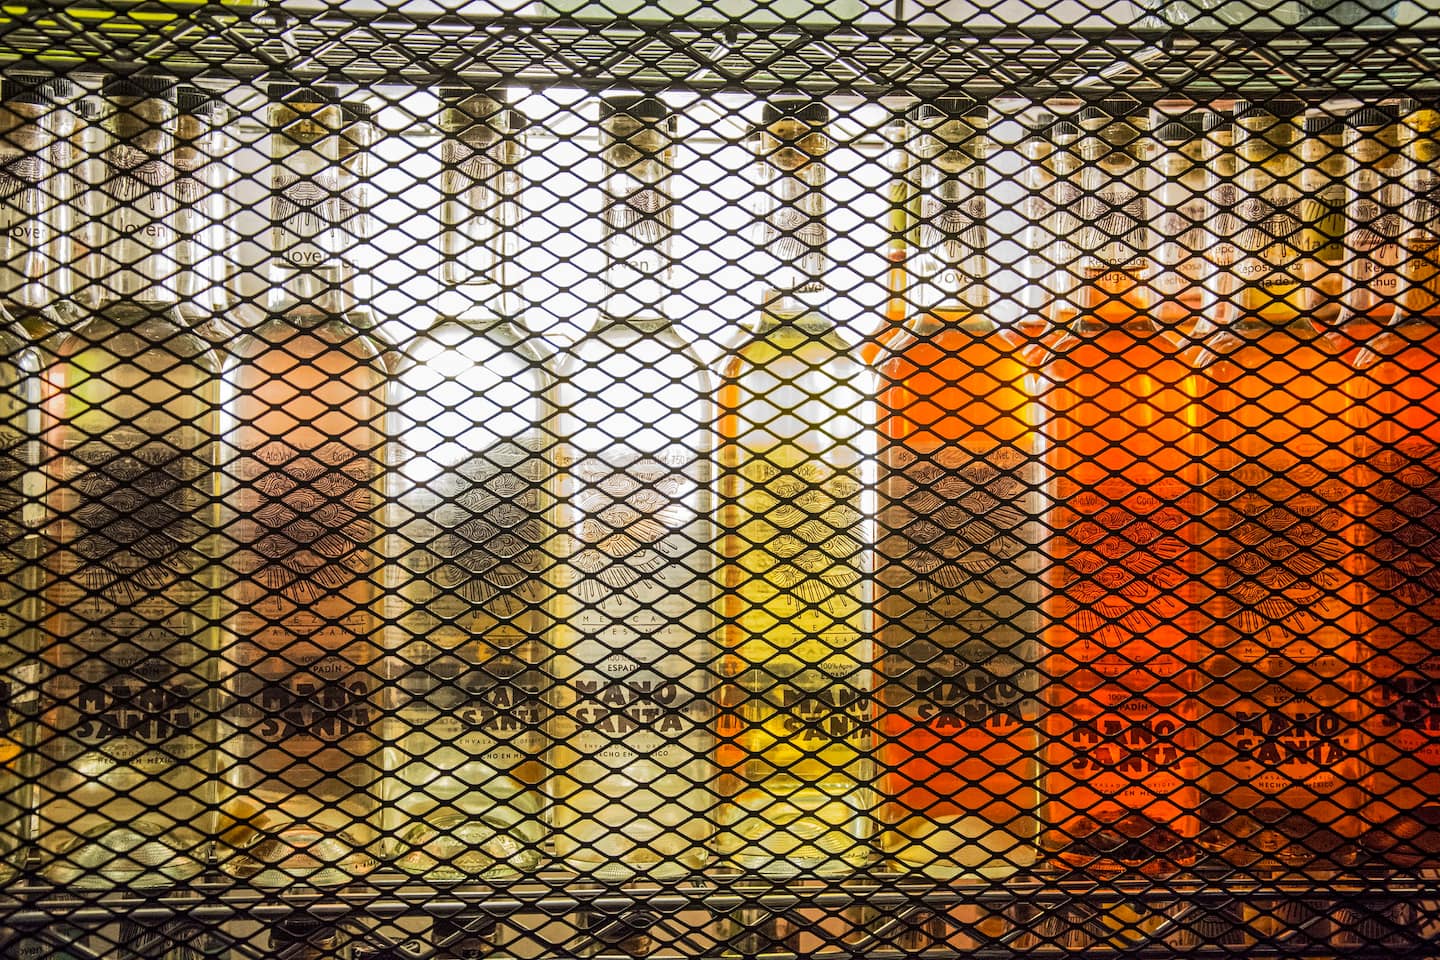 mezcal bottles with different types of mezcal